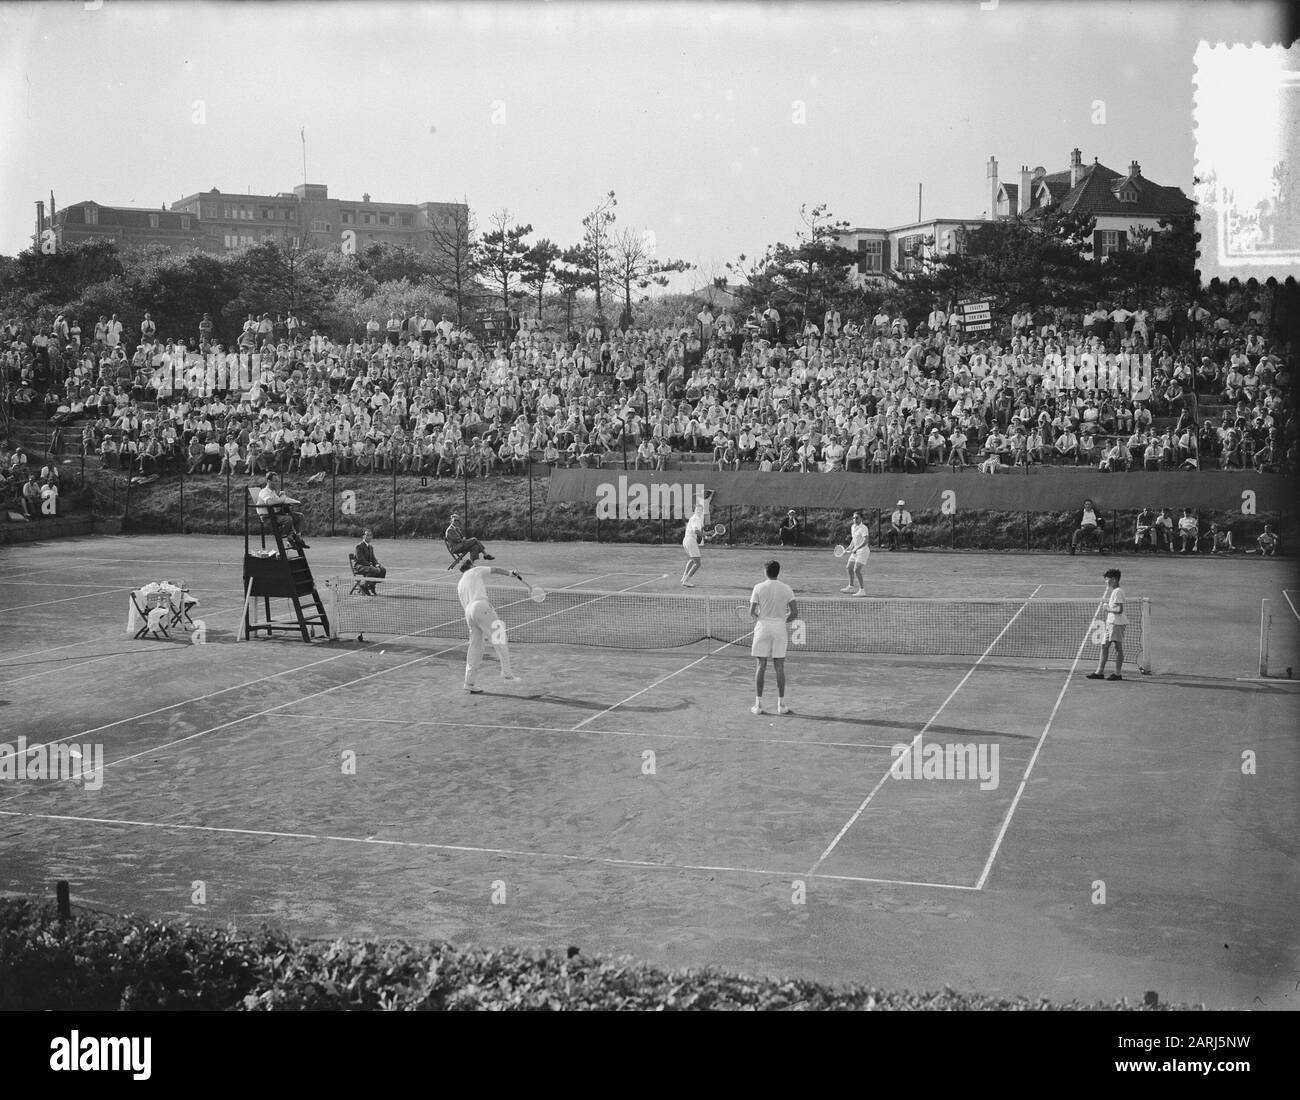 Wimbledon tennis game in Noordwijk, Patty Drobny, van Ewal Savith Date:  July 6, 1952 Location: Noordwijk Institutionname: Wimbledon Stock Photo -  Alamy